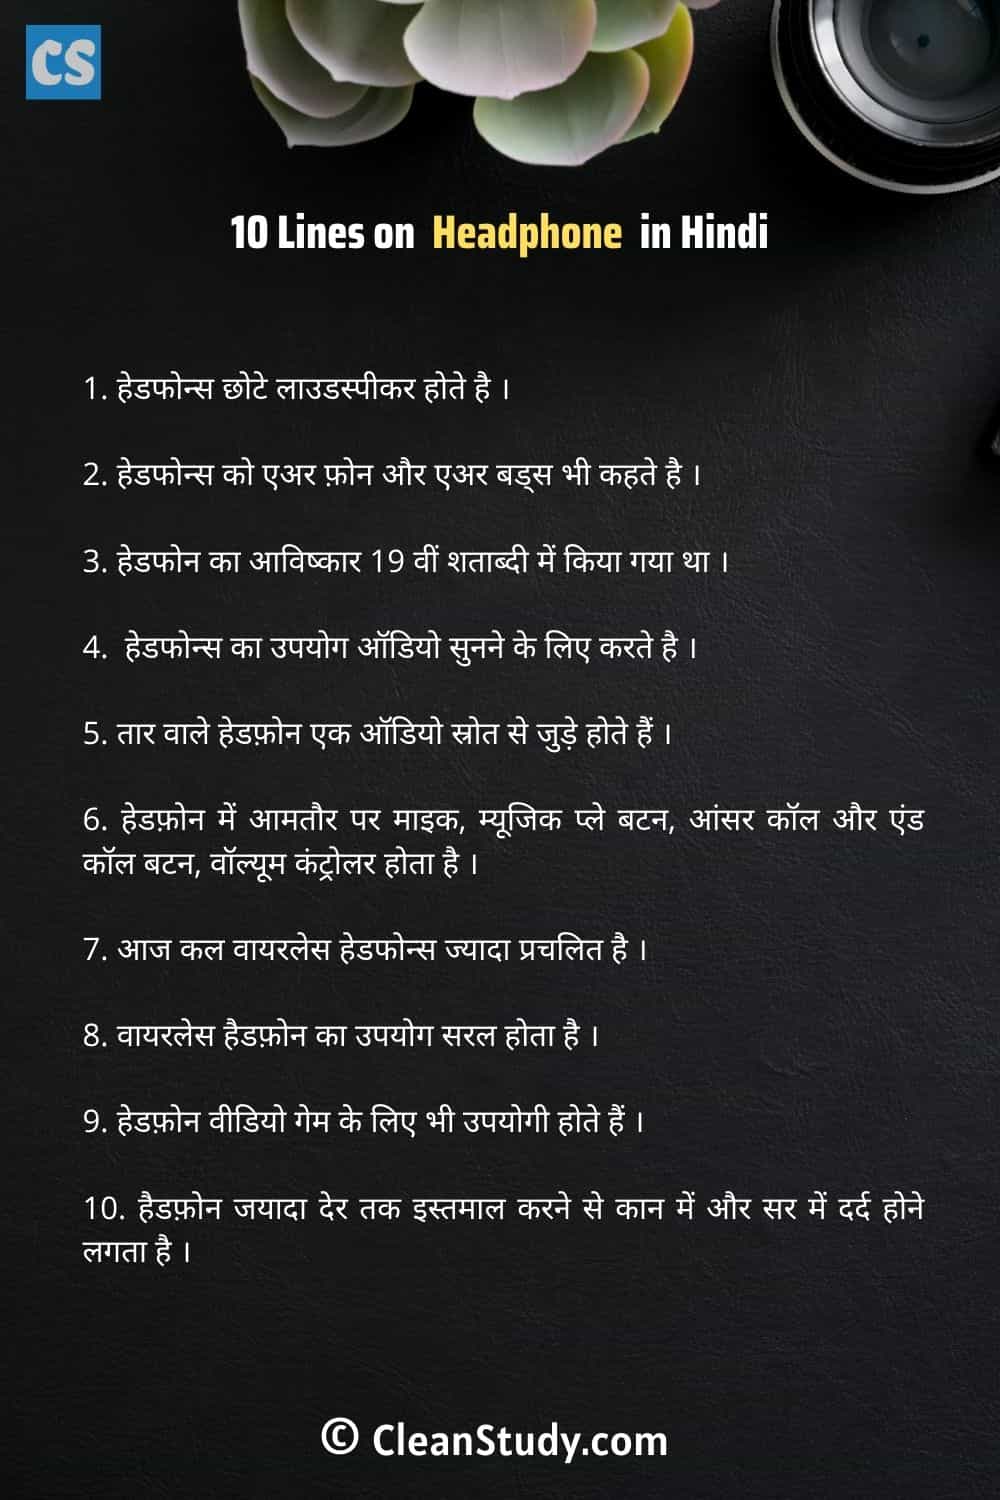 10 Lines on Headphone in Hindi